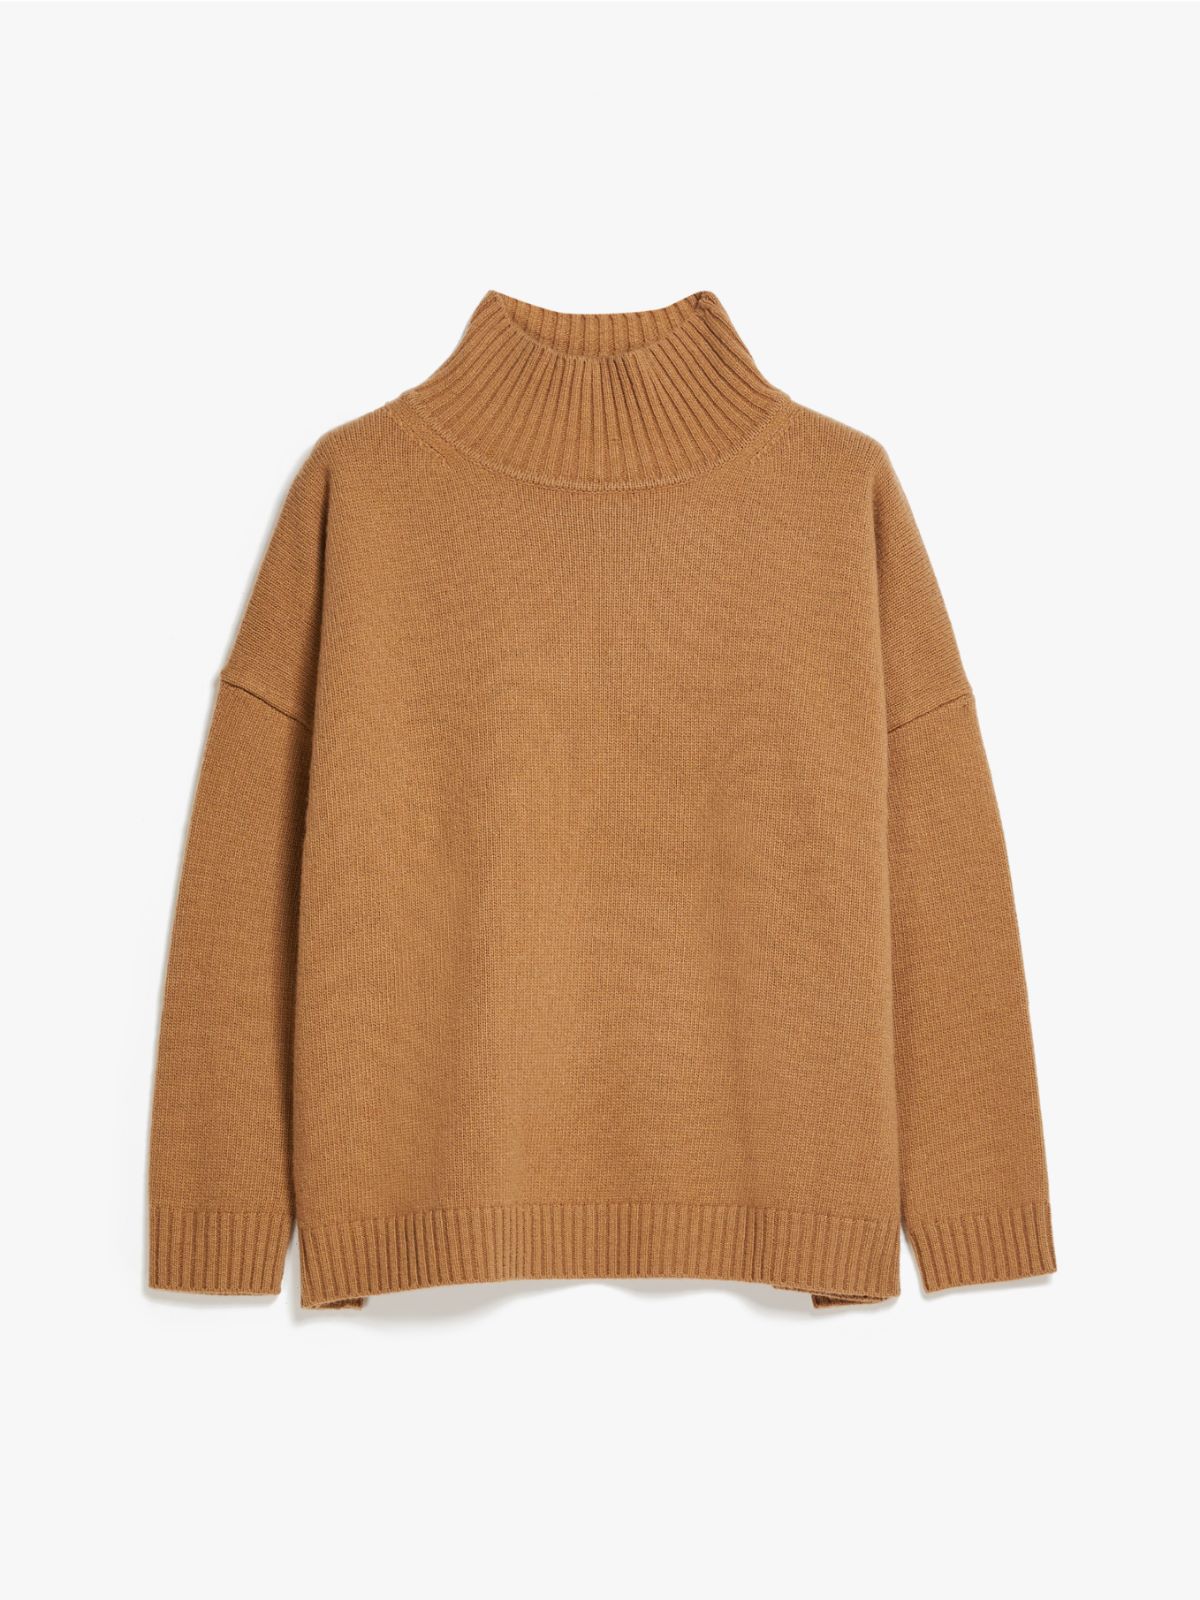 Carded wool sweater - CAMEL - Weekend Max Mara - 6